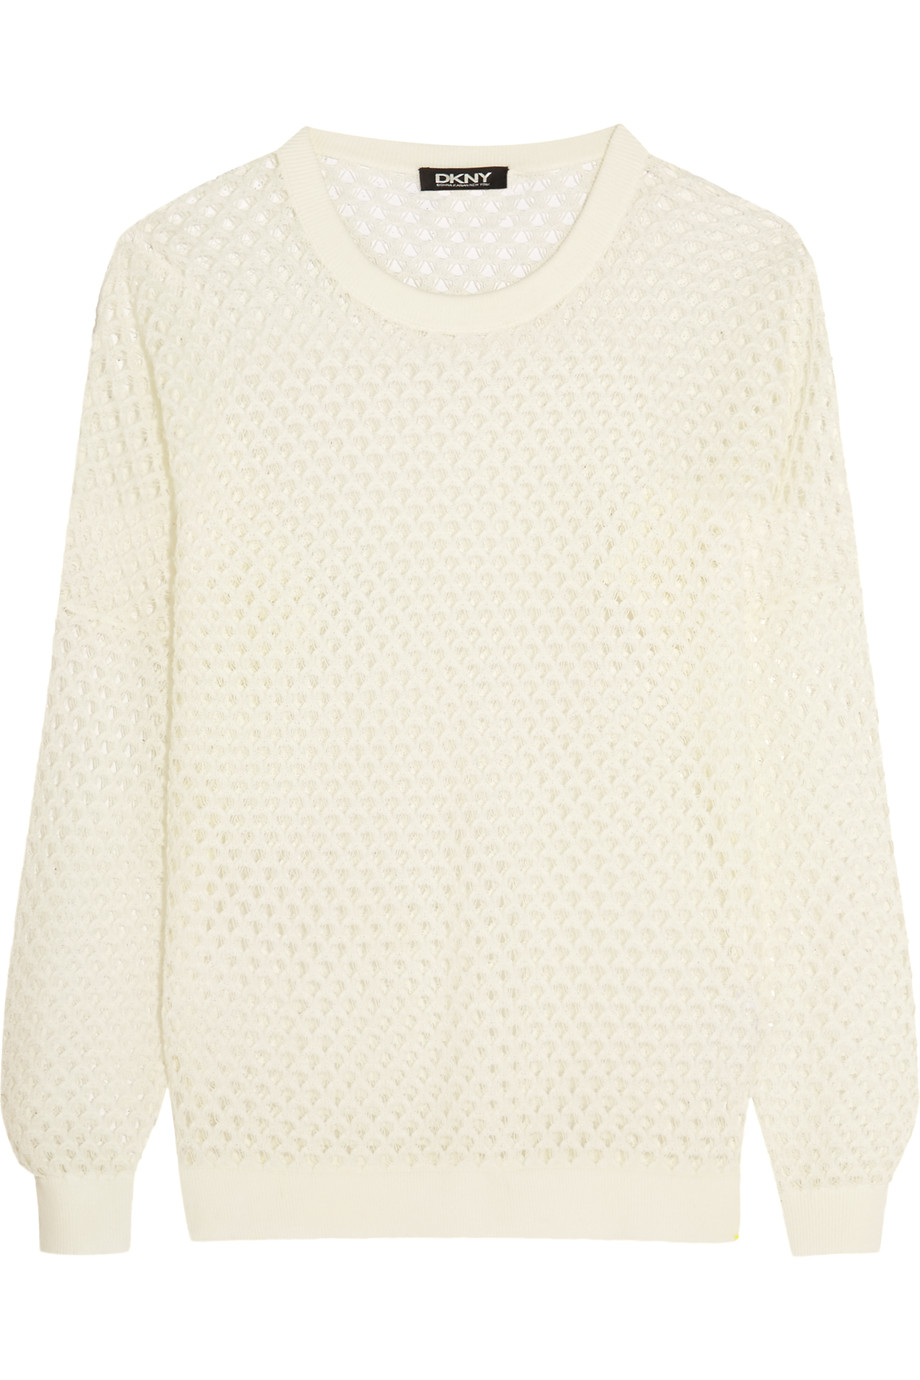 Dkny Open-knit Cotton Sweater | ModeSens